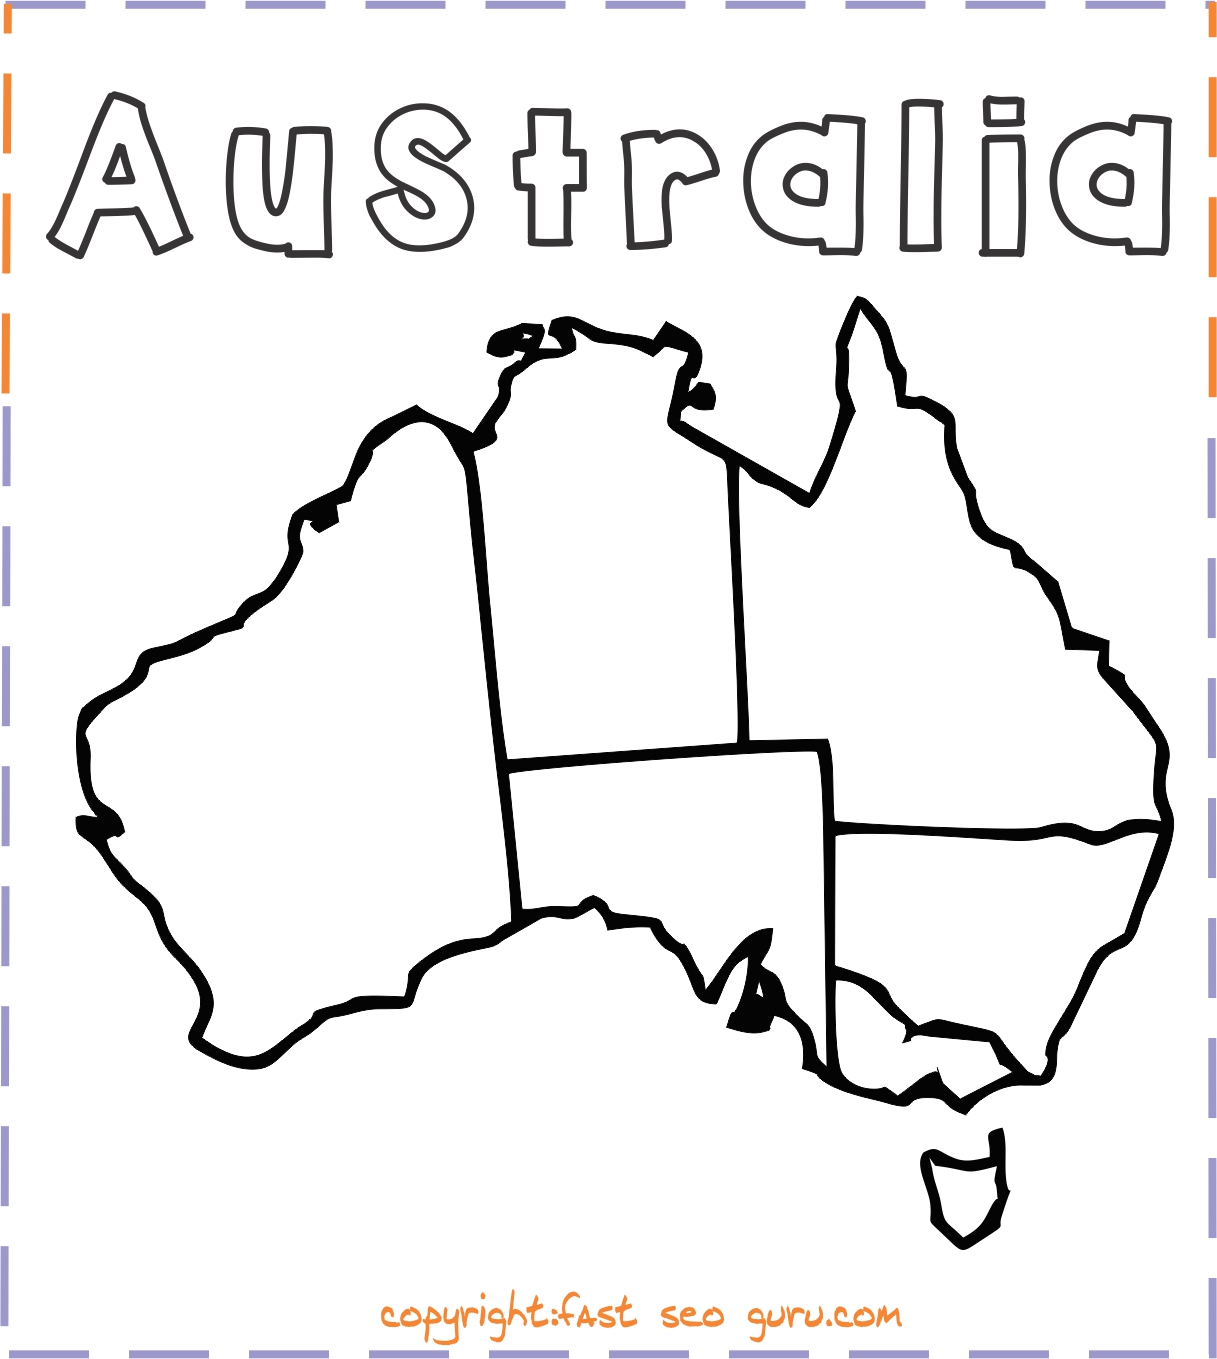 printable-australia-map-coloring-page